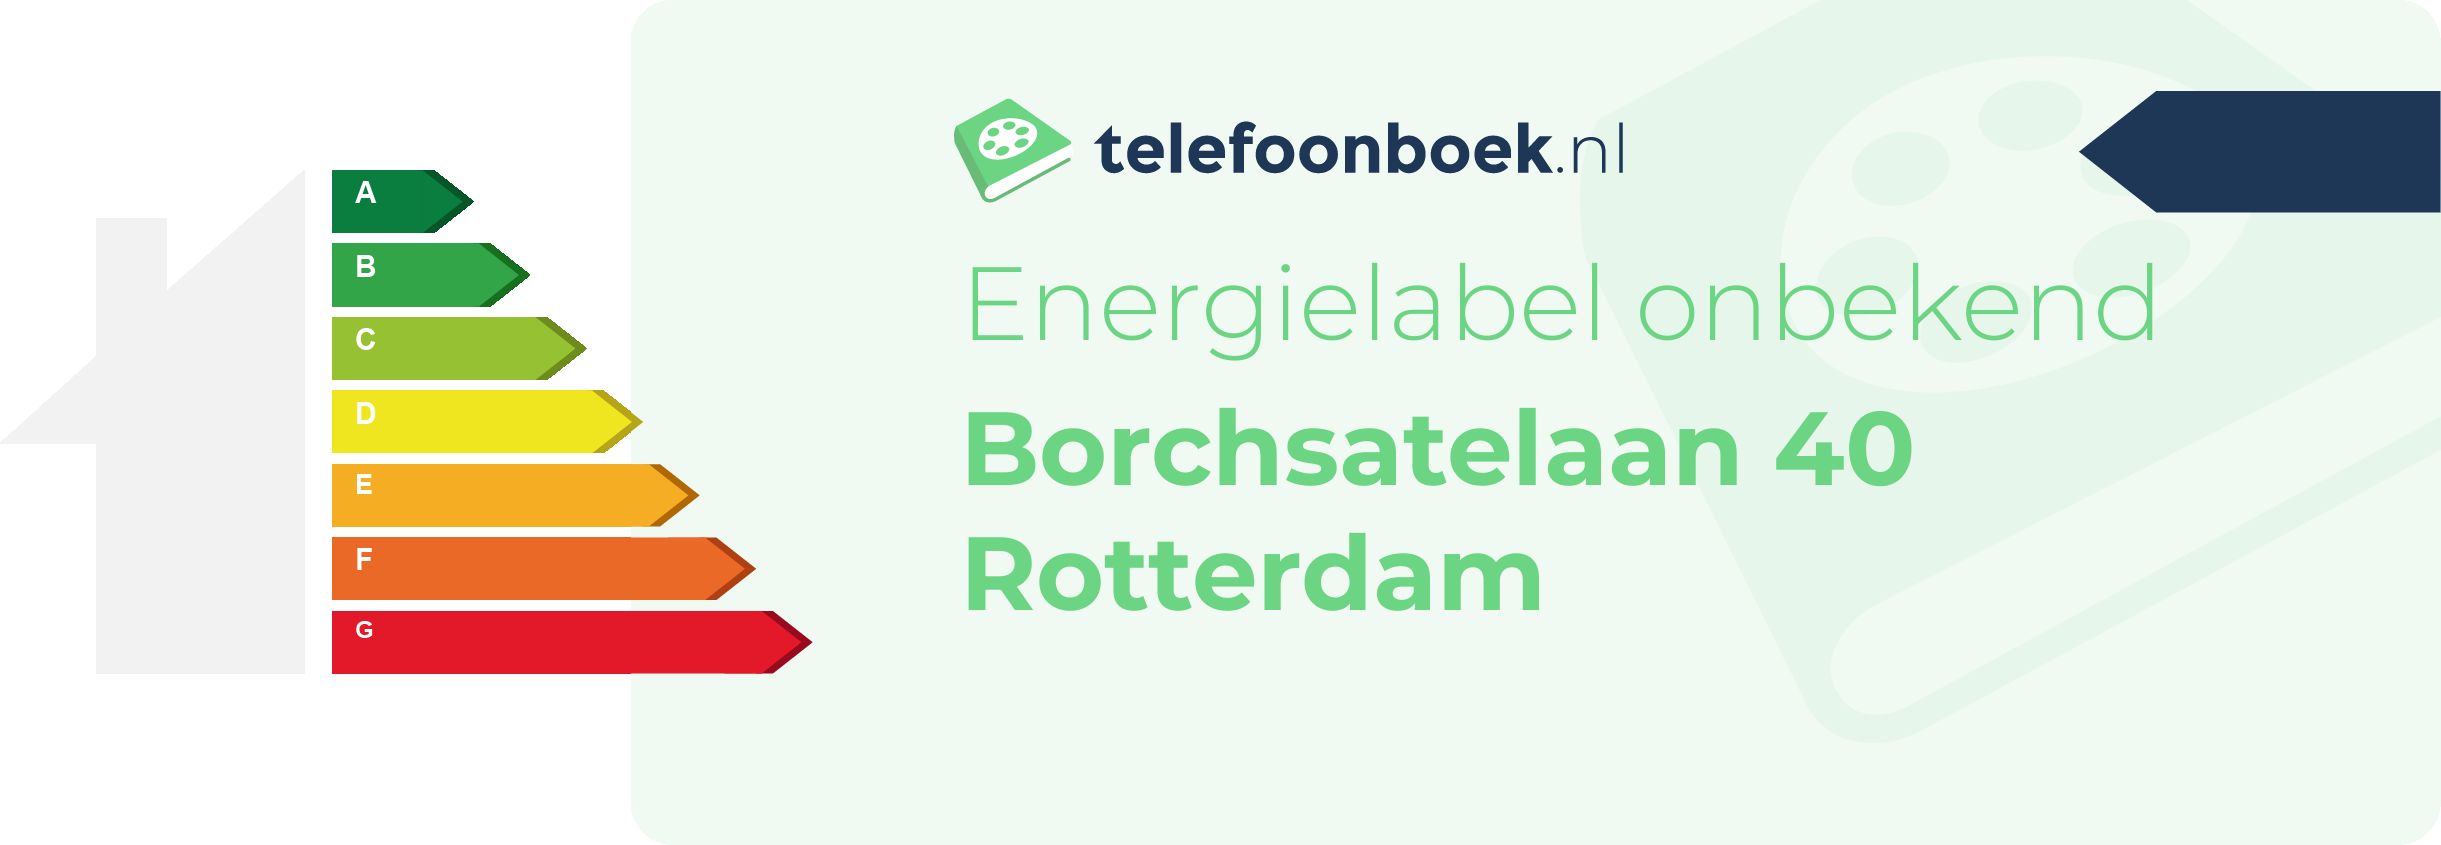 Energielabel Borchsatelaan 40 Rotterdam